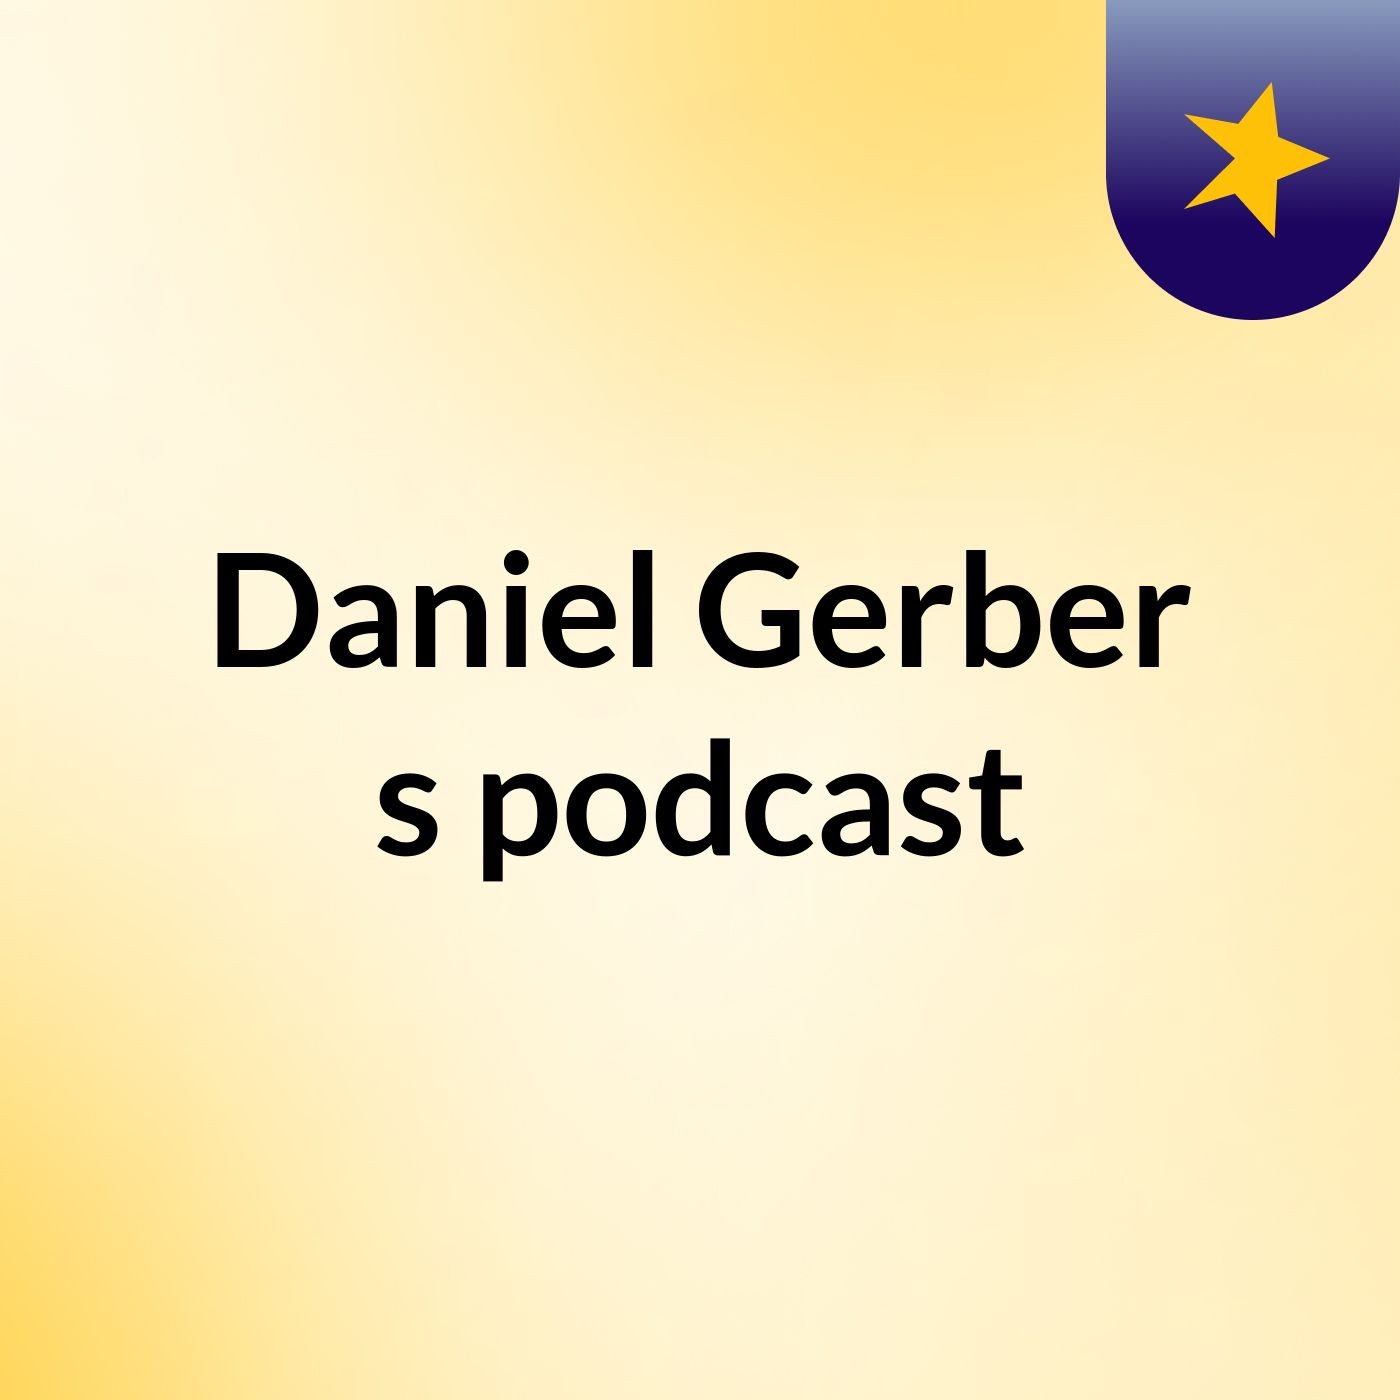 Daniel Gerber's podcast